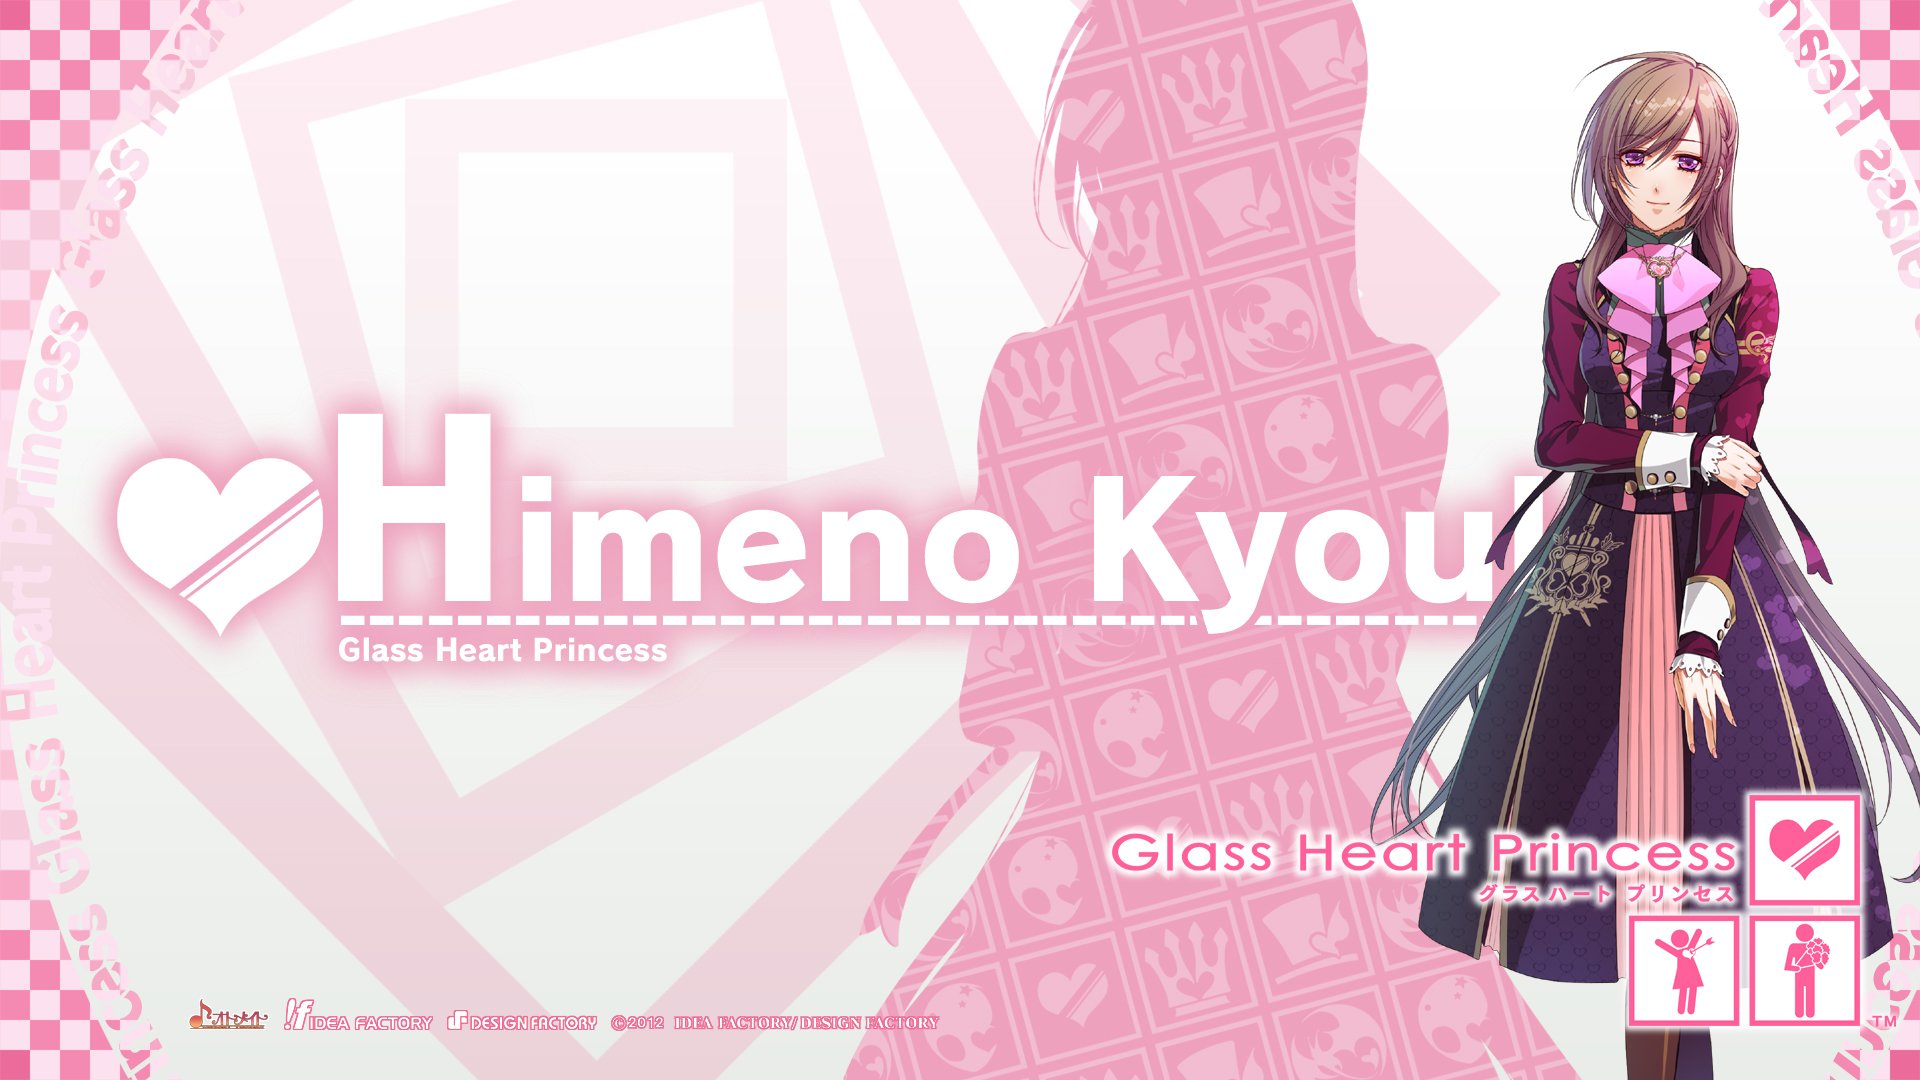 Glass Heart Princess - Himeno Kyouko render by Fashion-Neko21 on DeviantArt